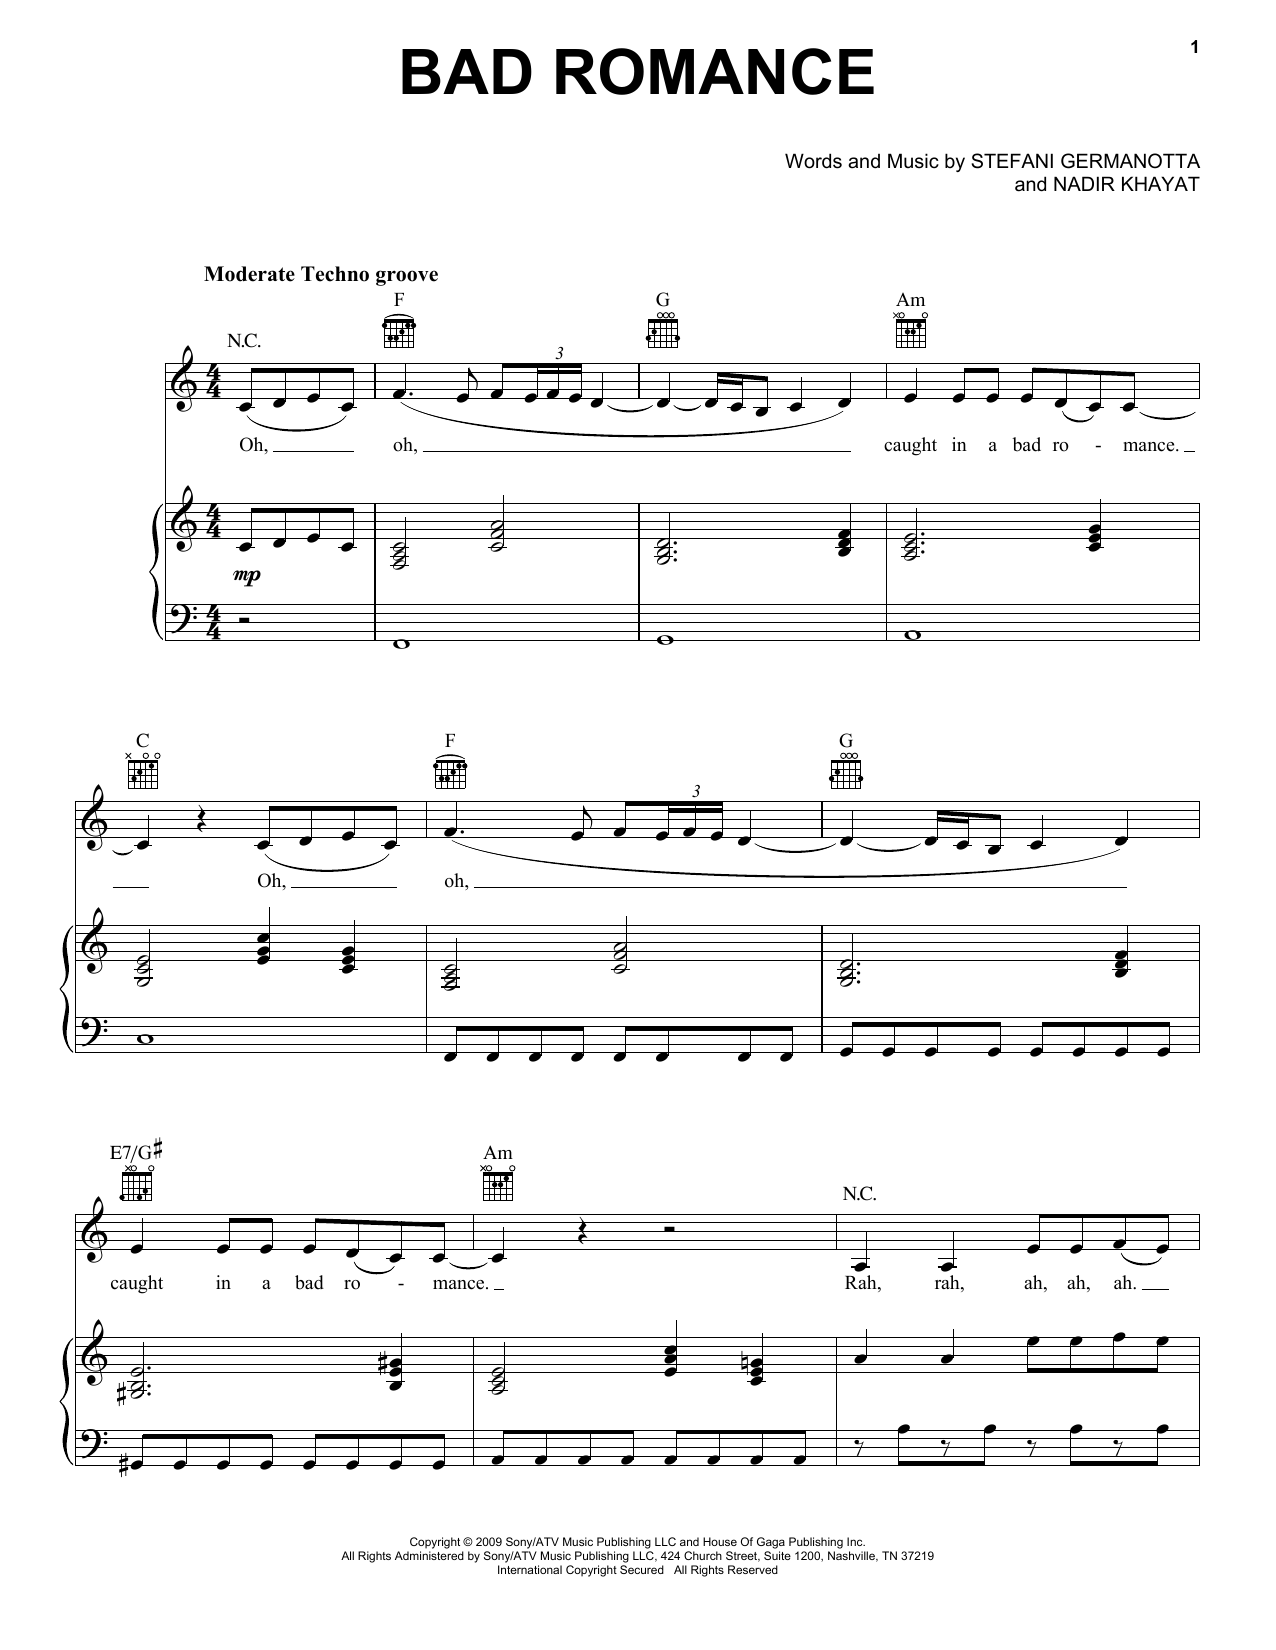 Lady Gaga Bad Romance Sheet Music Notes & Chords for Easy Guitar Tab - Download or Print PDF